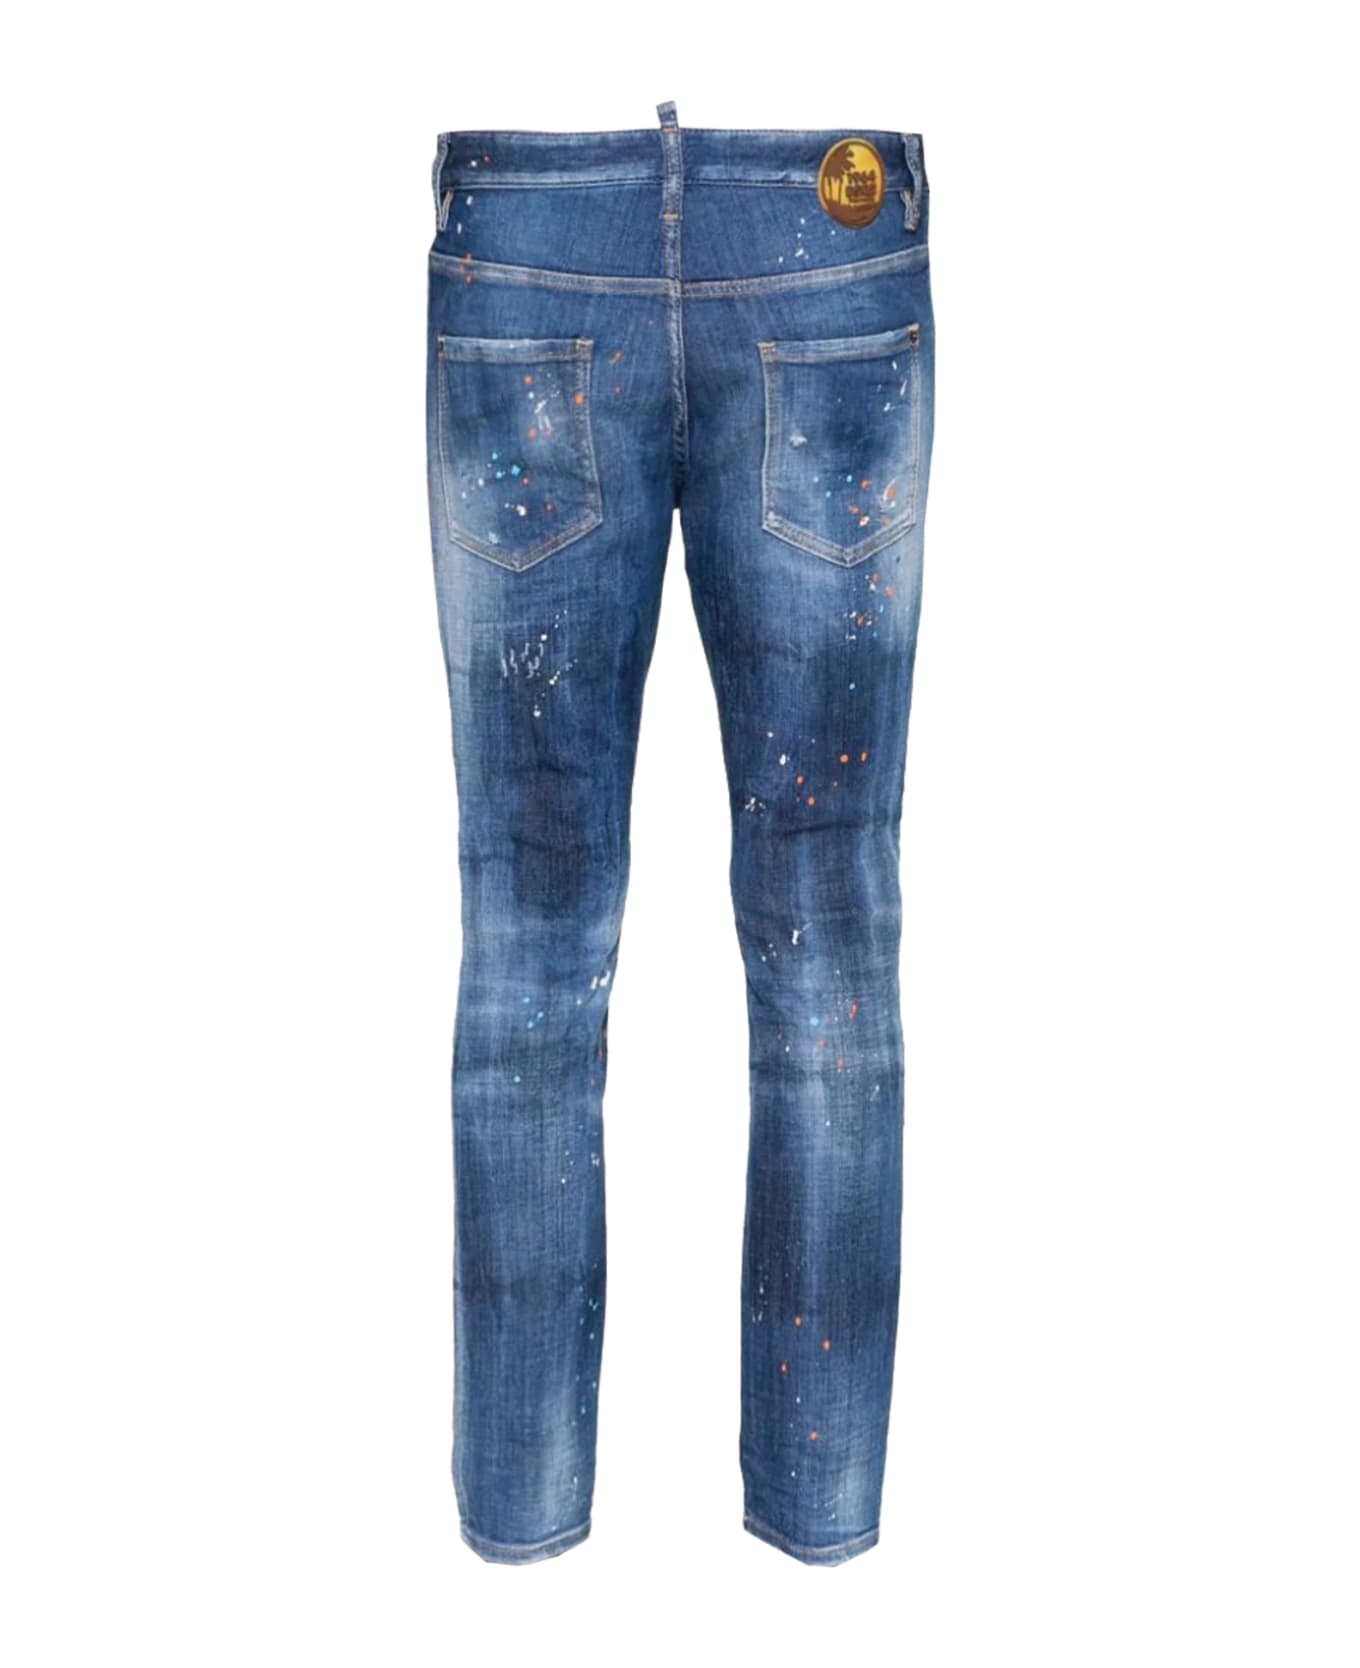 Dsquared2 Jeans - Blue デニム